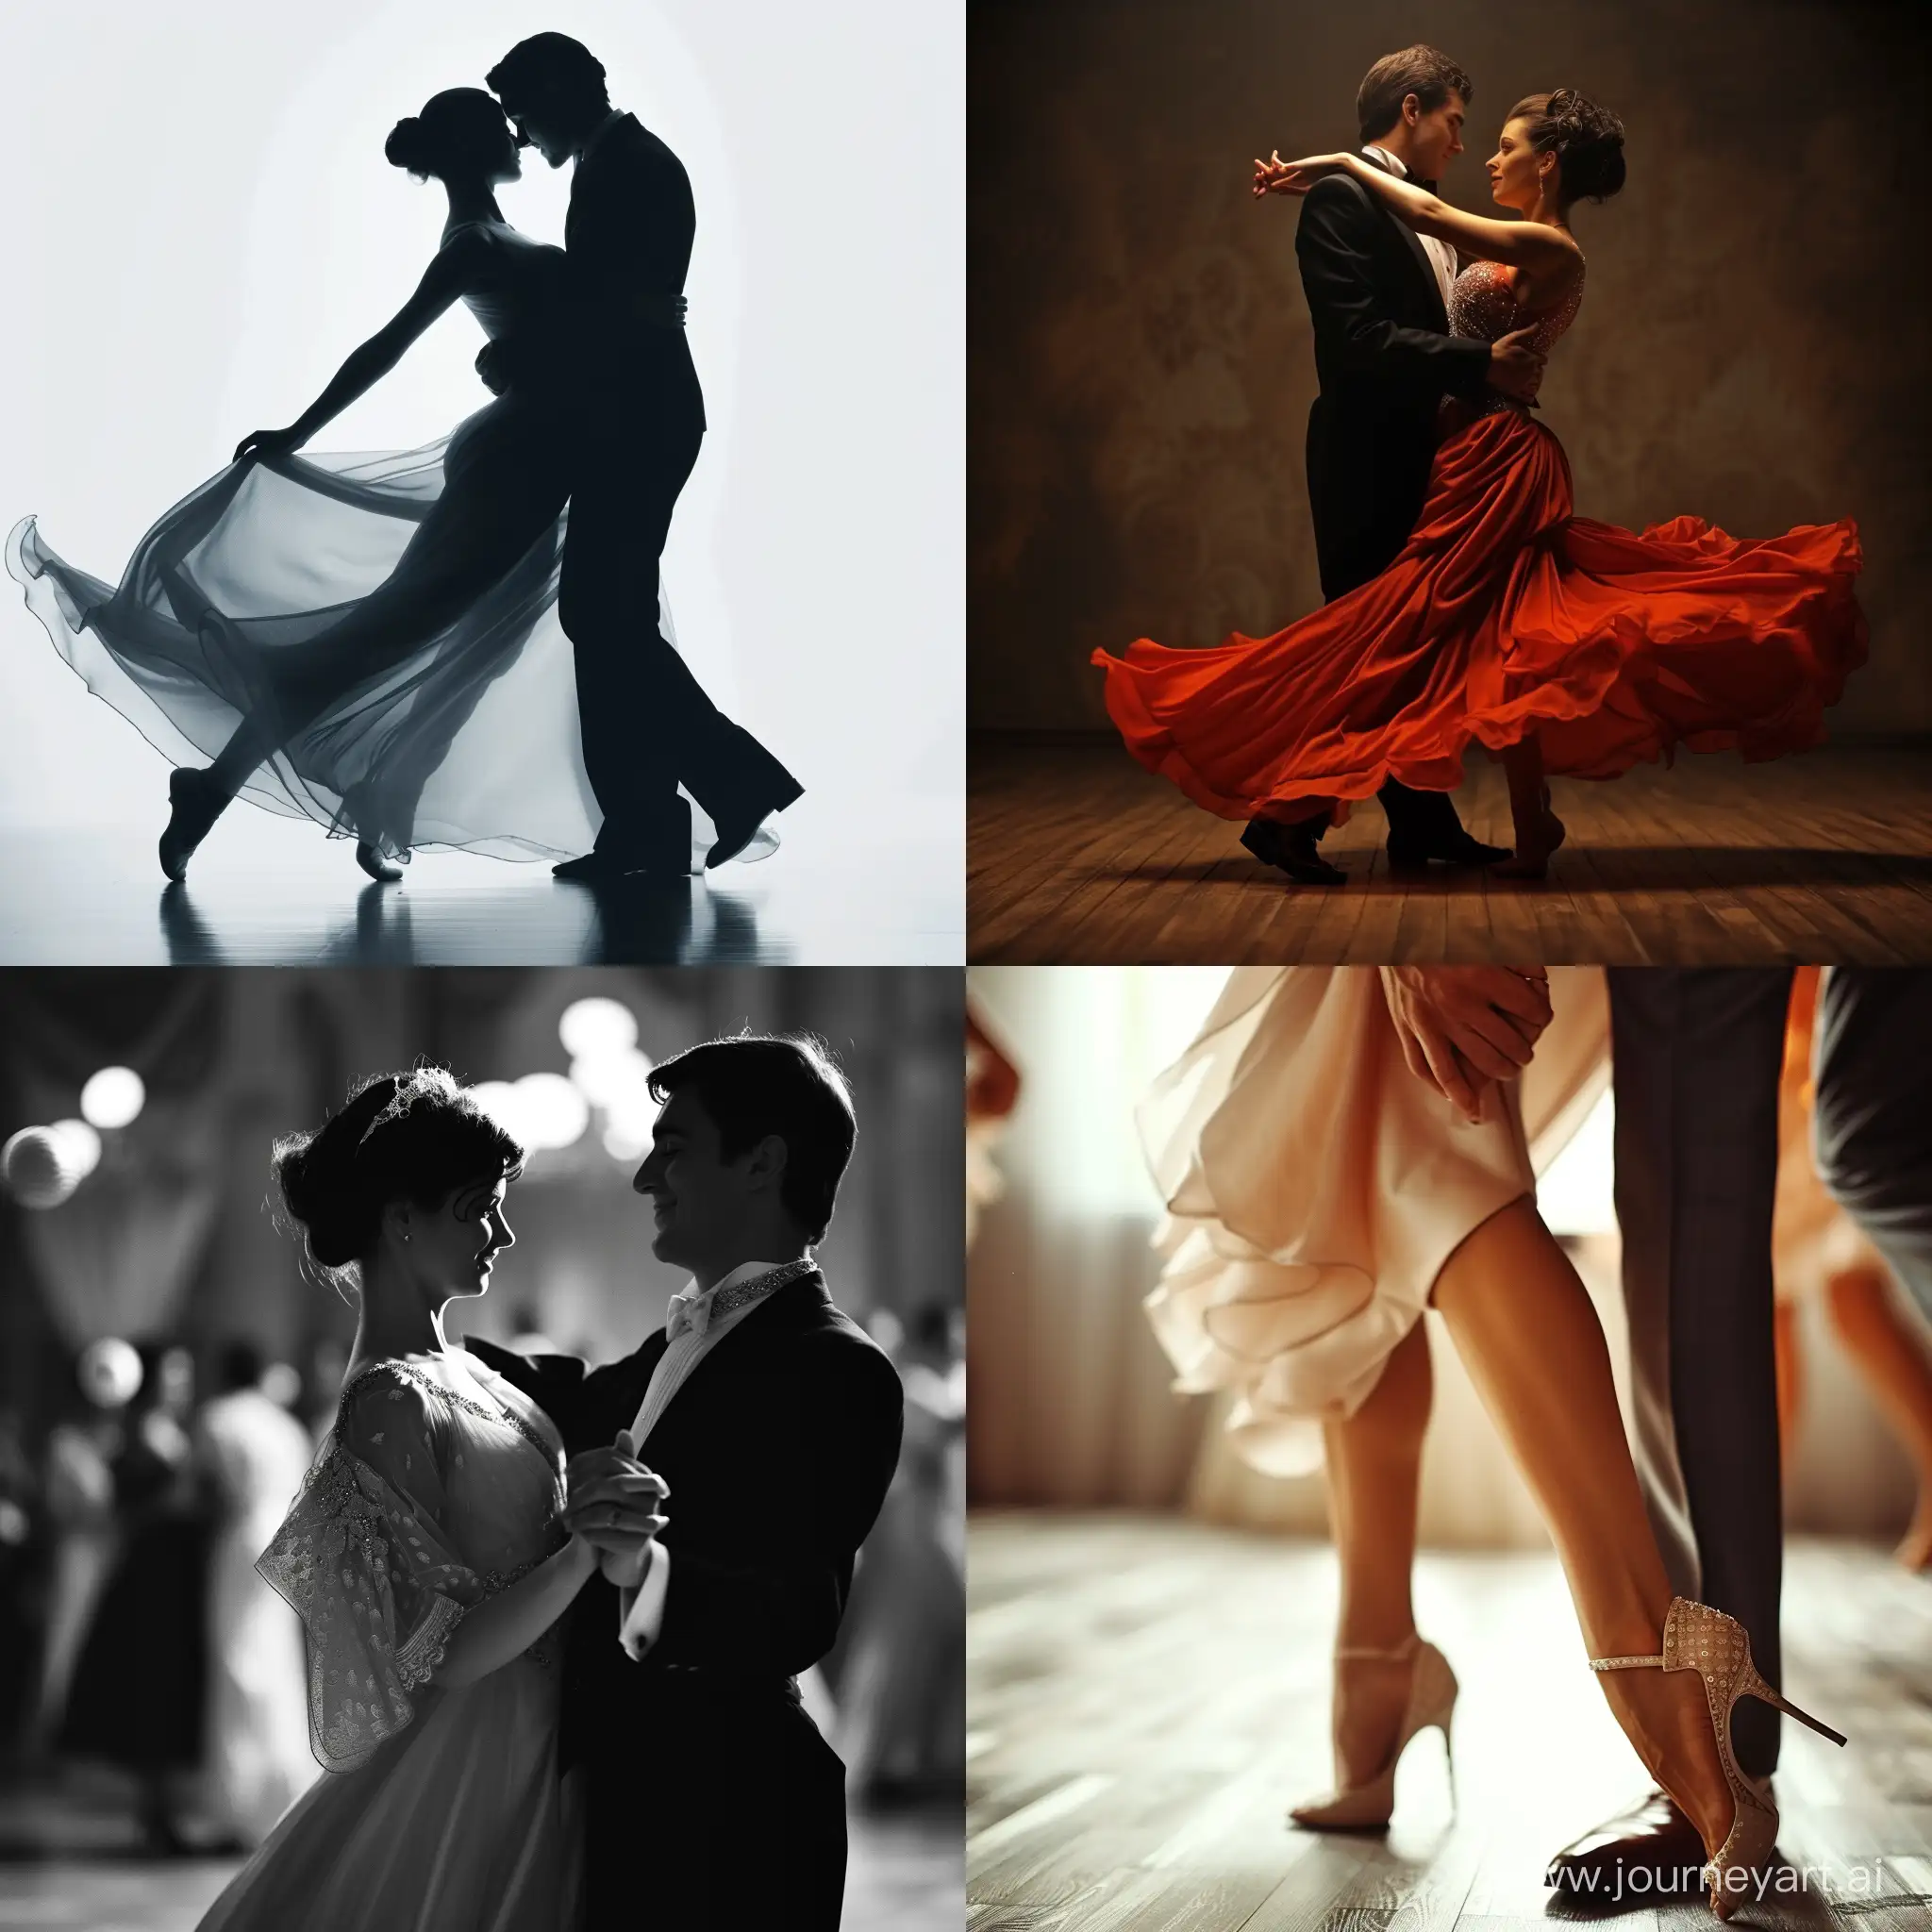 Elegant-Ballroom-Dancing-Couple-in-a-11-Aspect-Ratio